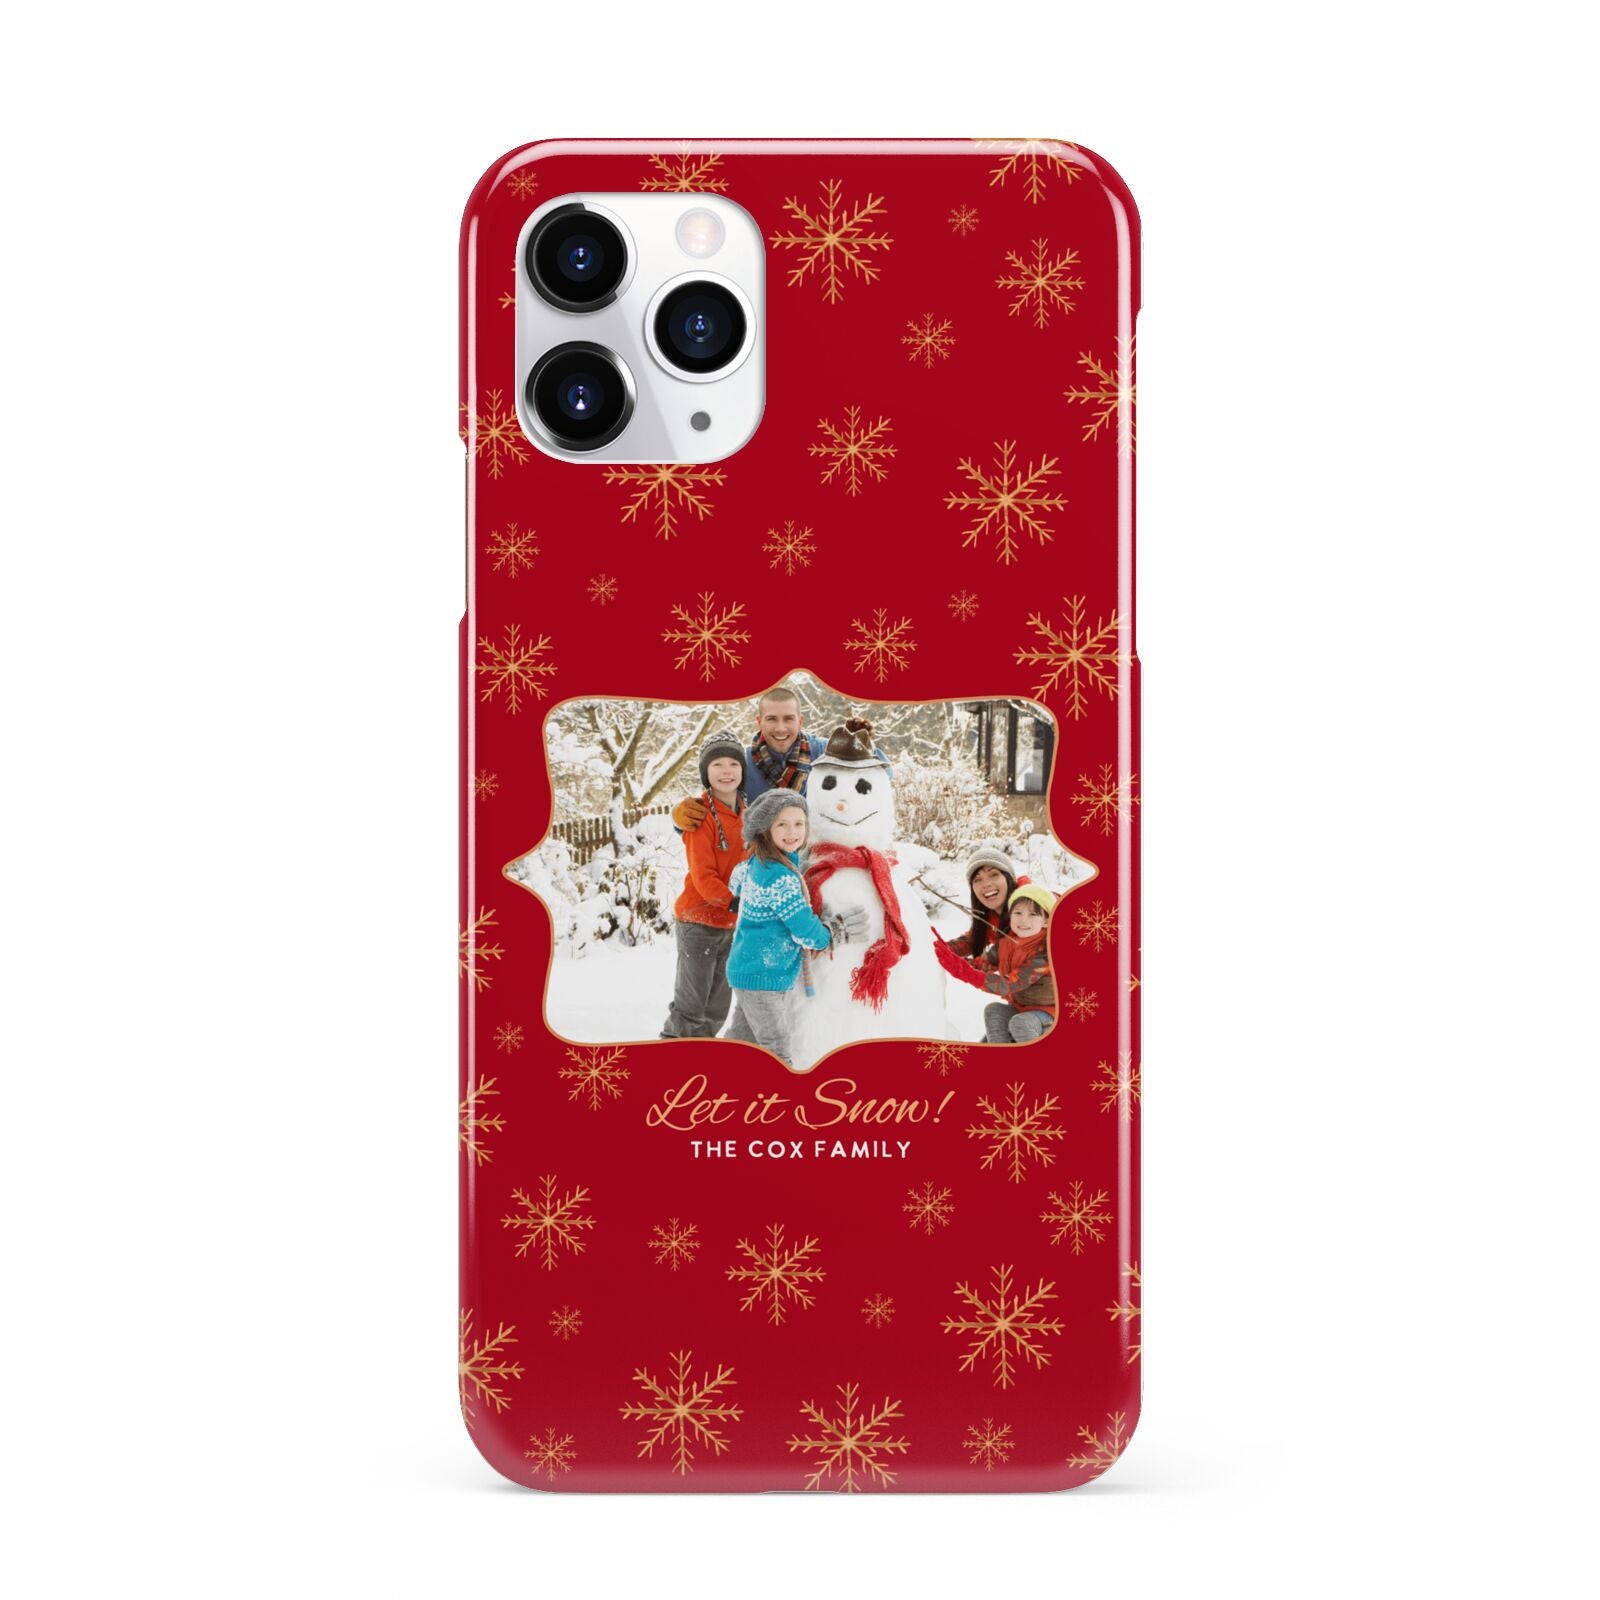 Let it Snow Christmas Photo Upload iPhone 11 Pro 3D Snap Case